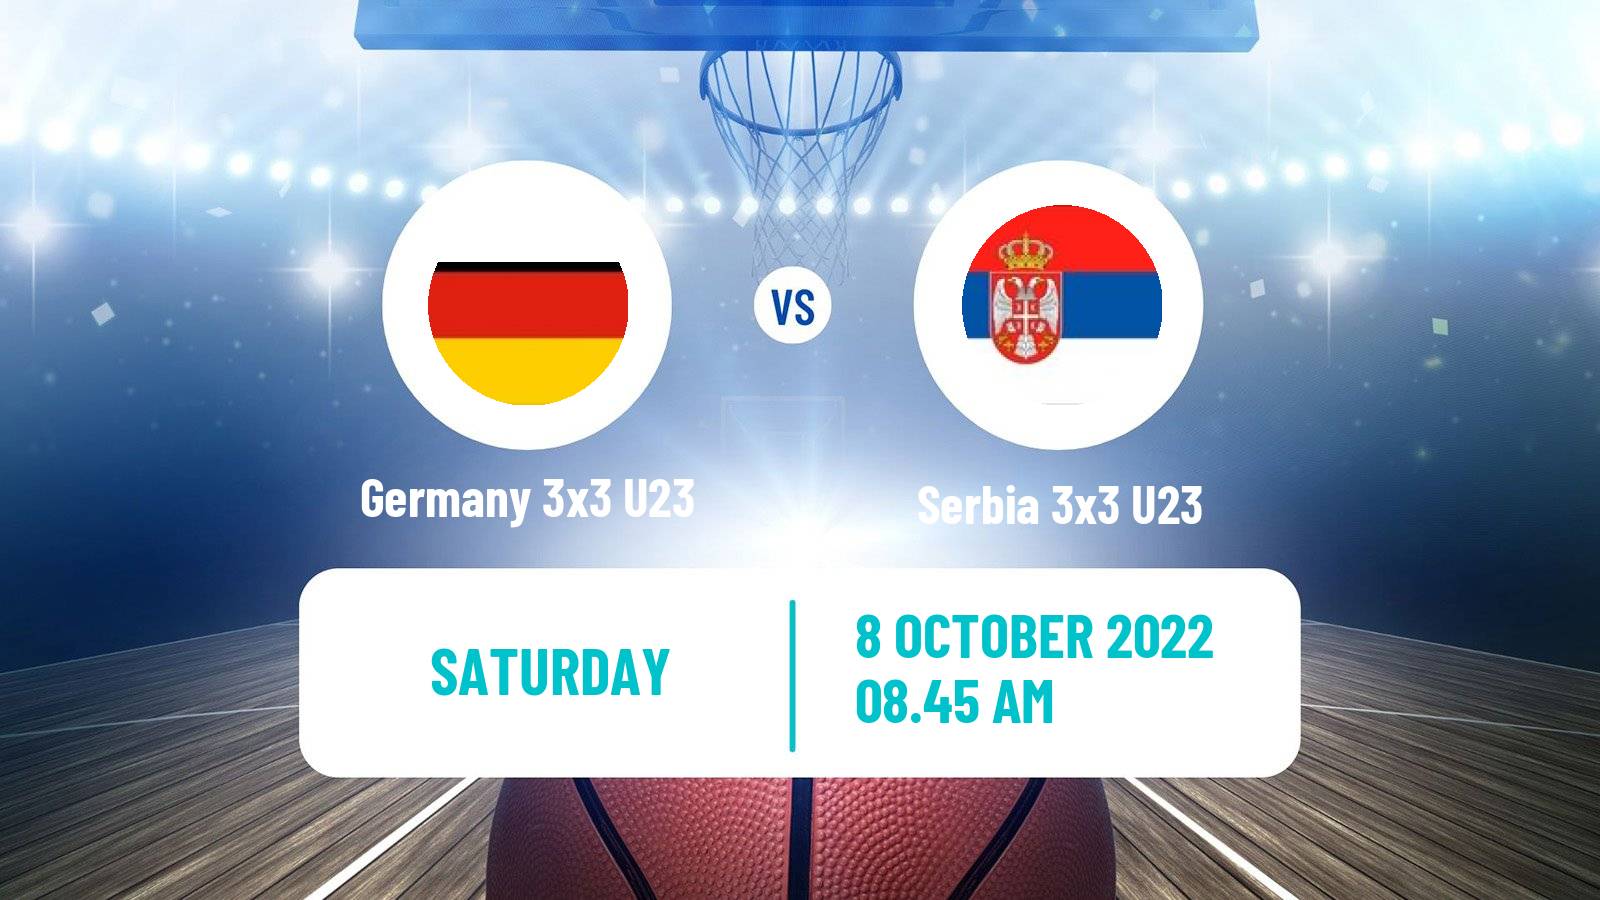 Basketball World Cup Basketball 3x3 U23 Germany 3x3 U23 - Serbia 3x3 U23